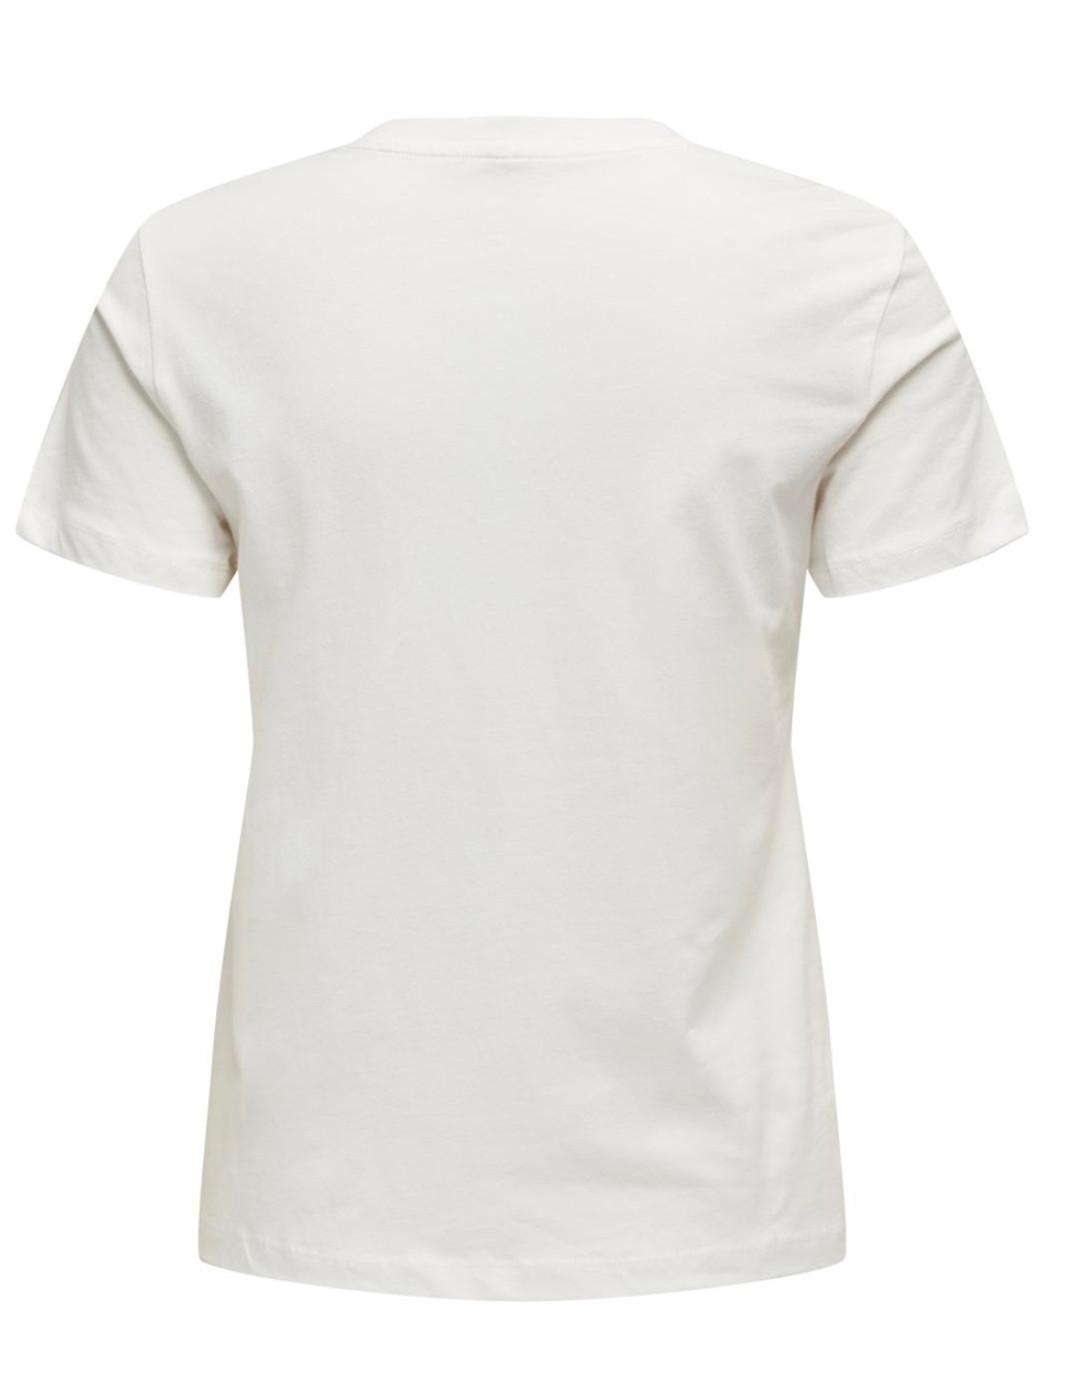 Camisetas Only Camilla blanco manga corta para mujer